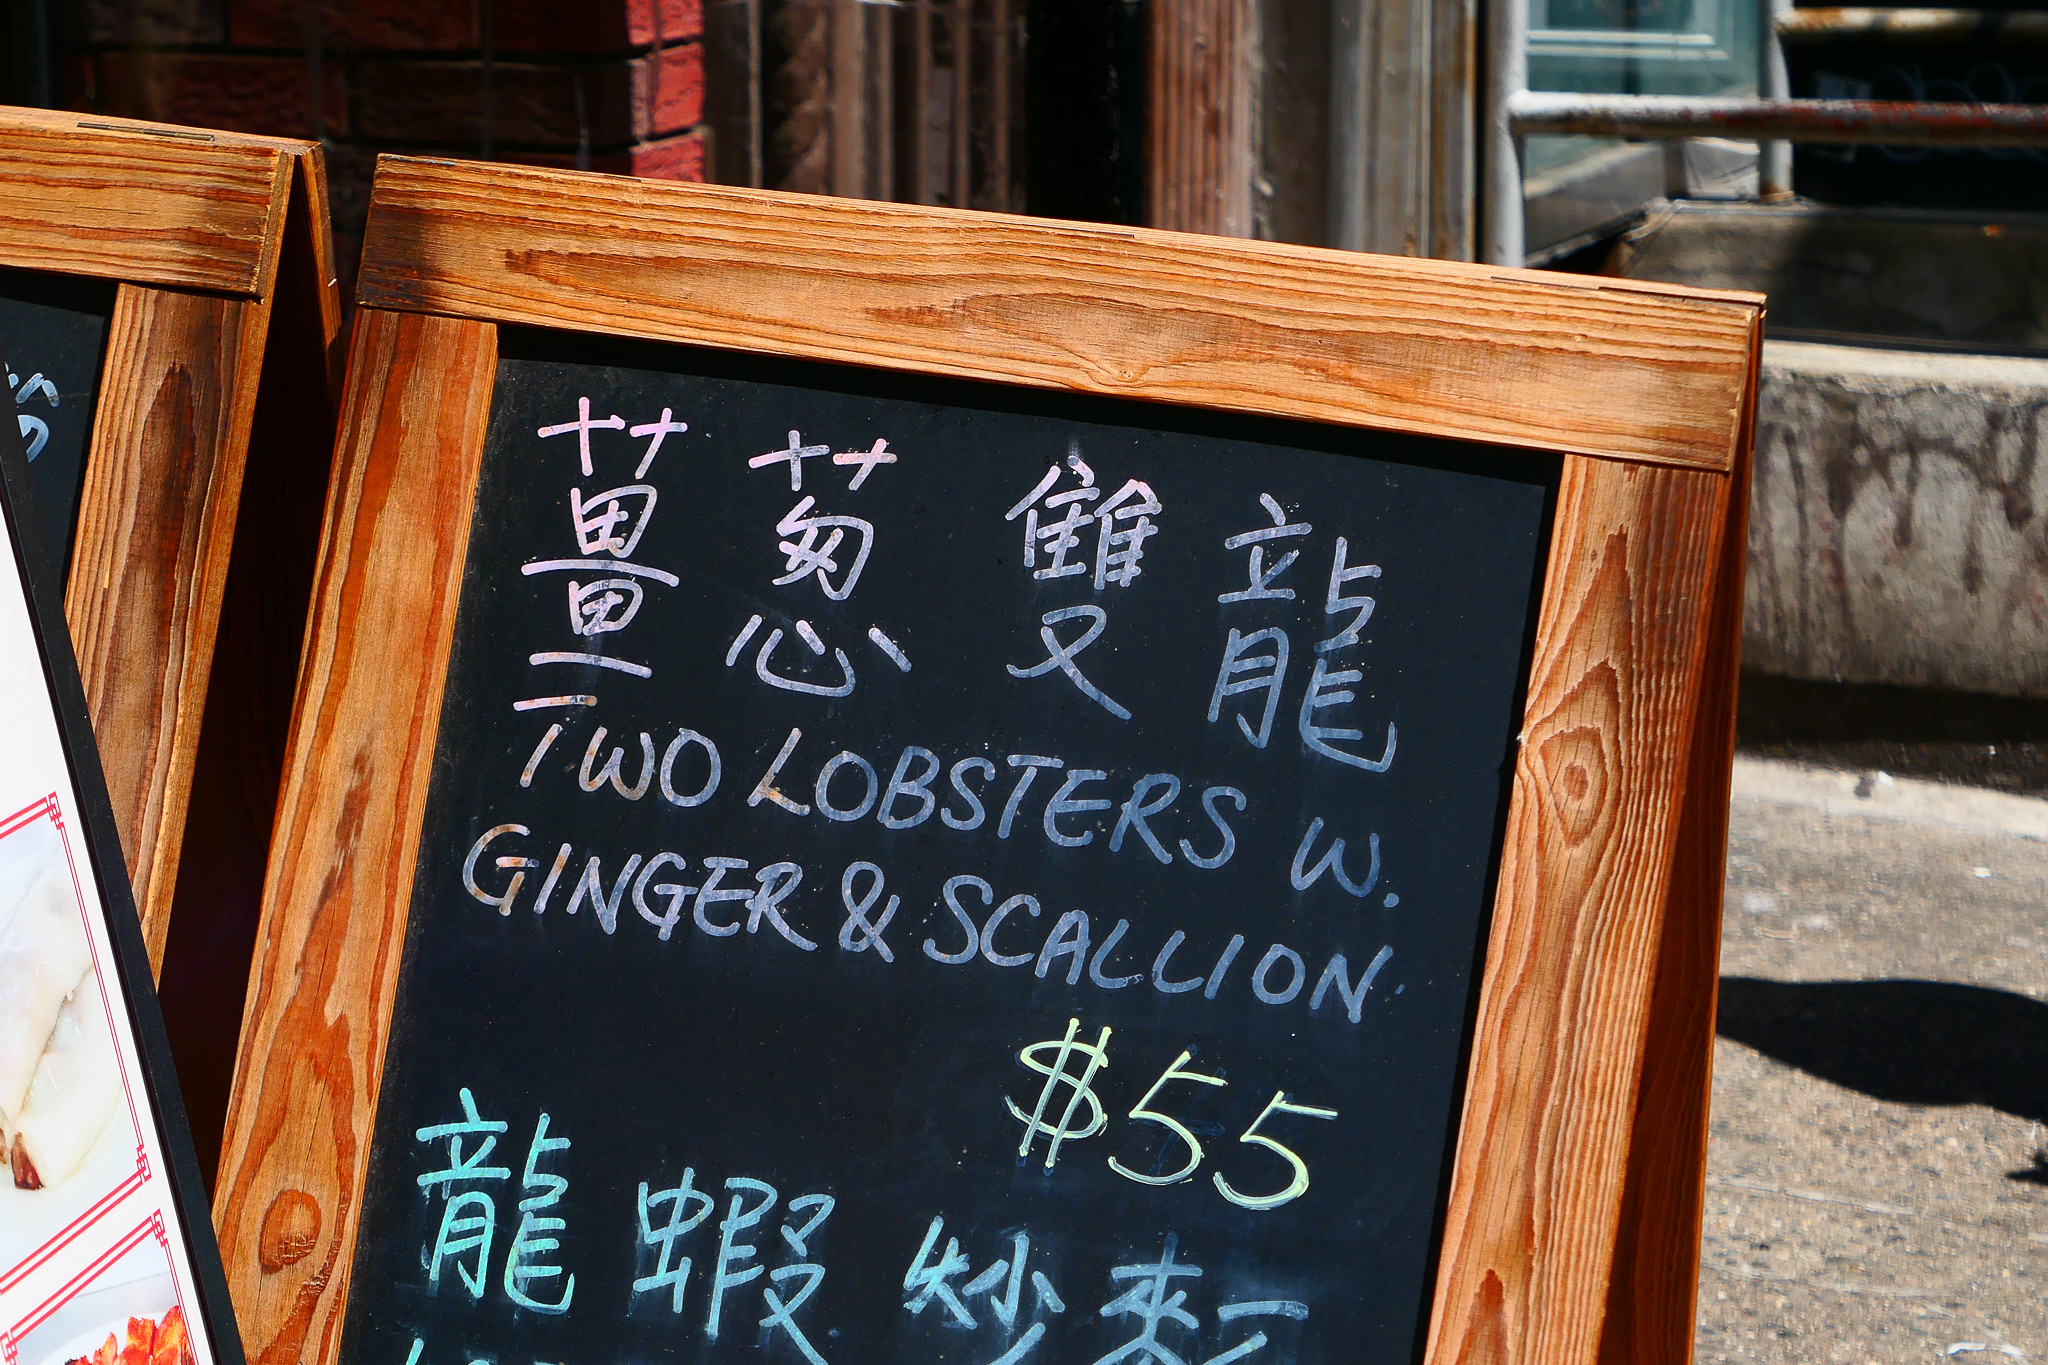 Handwritten lettering on a blackboard: 'Two lobsters w. ginger and scallion $55'